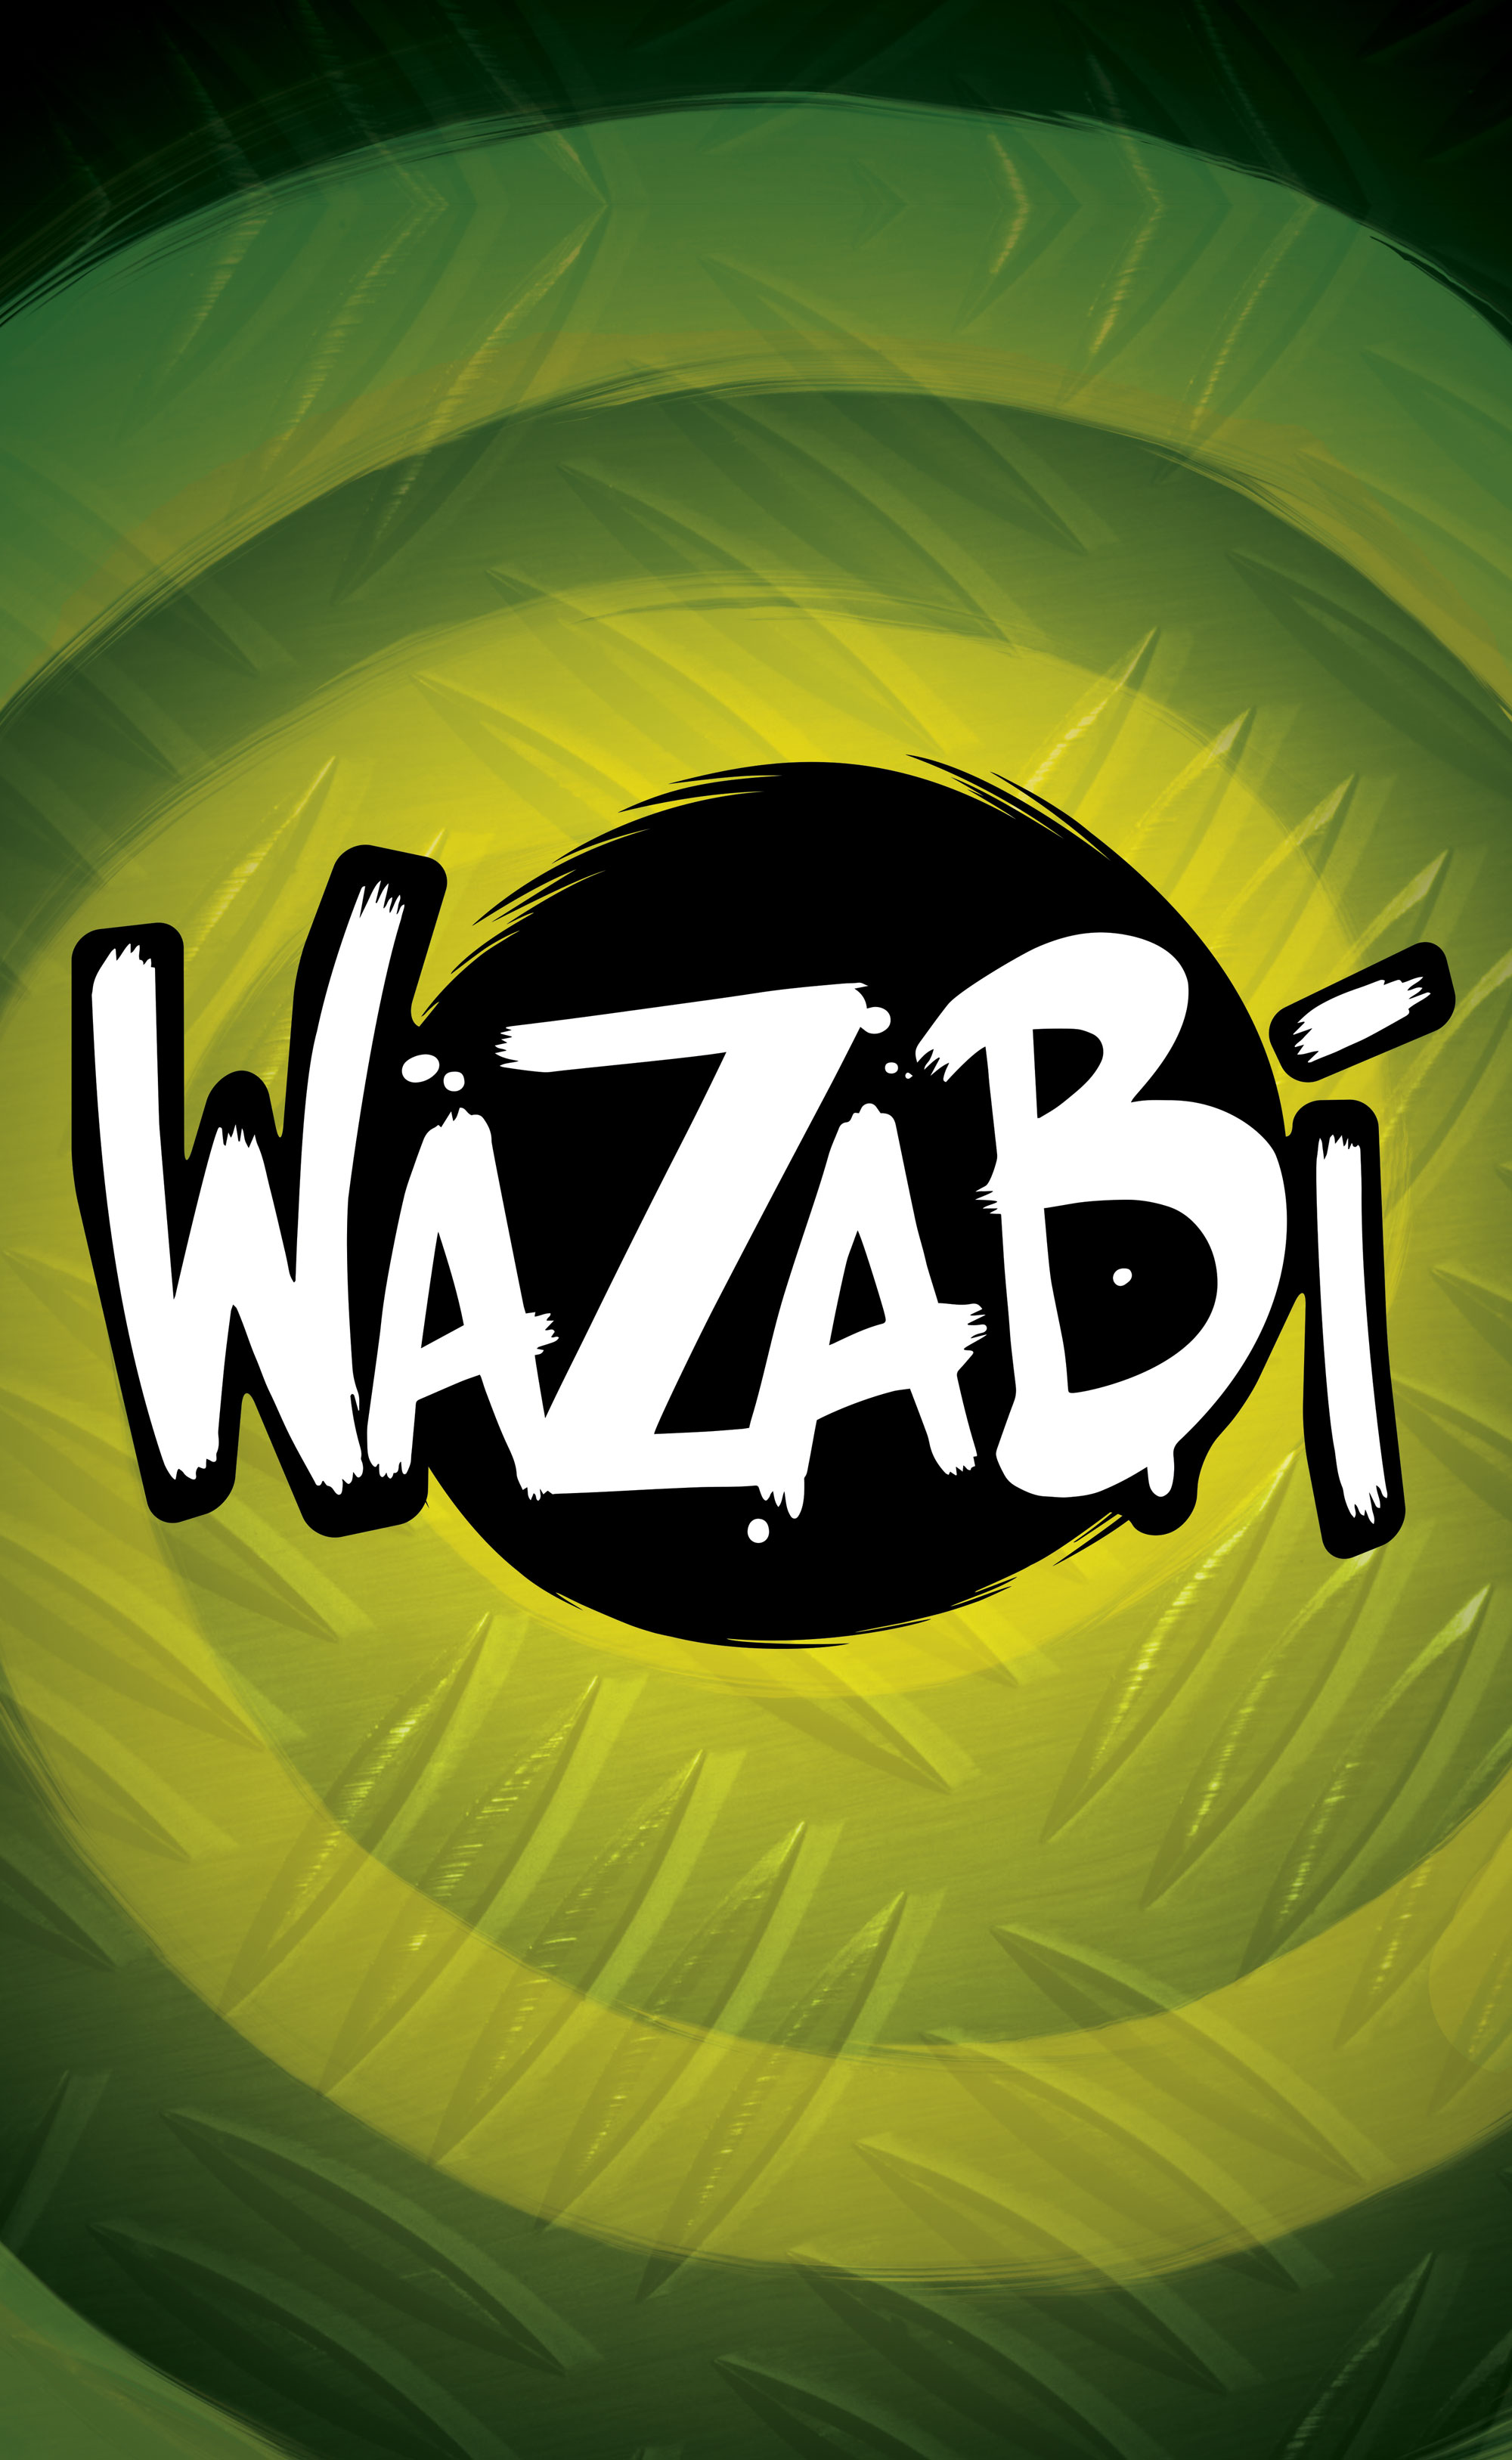 Verso de carte wazabi